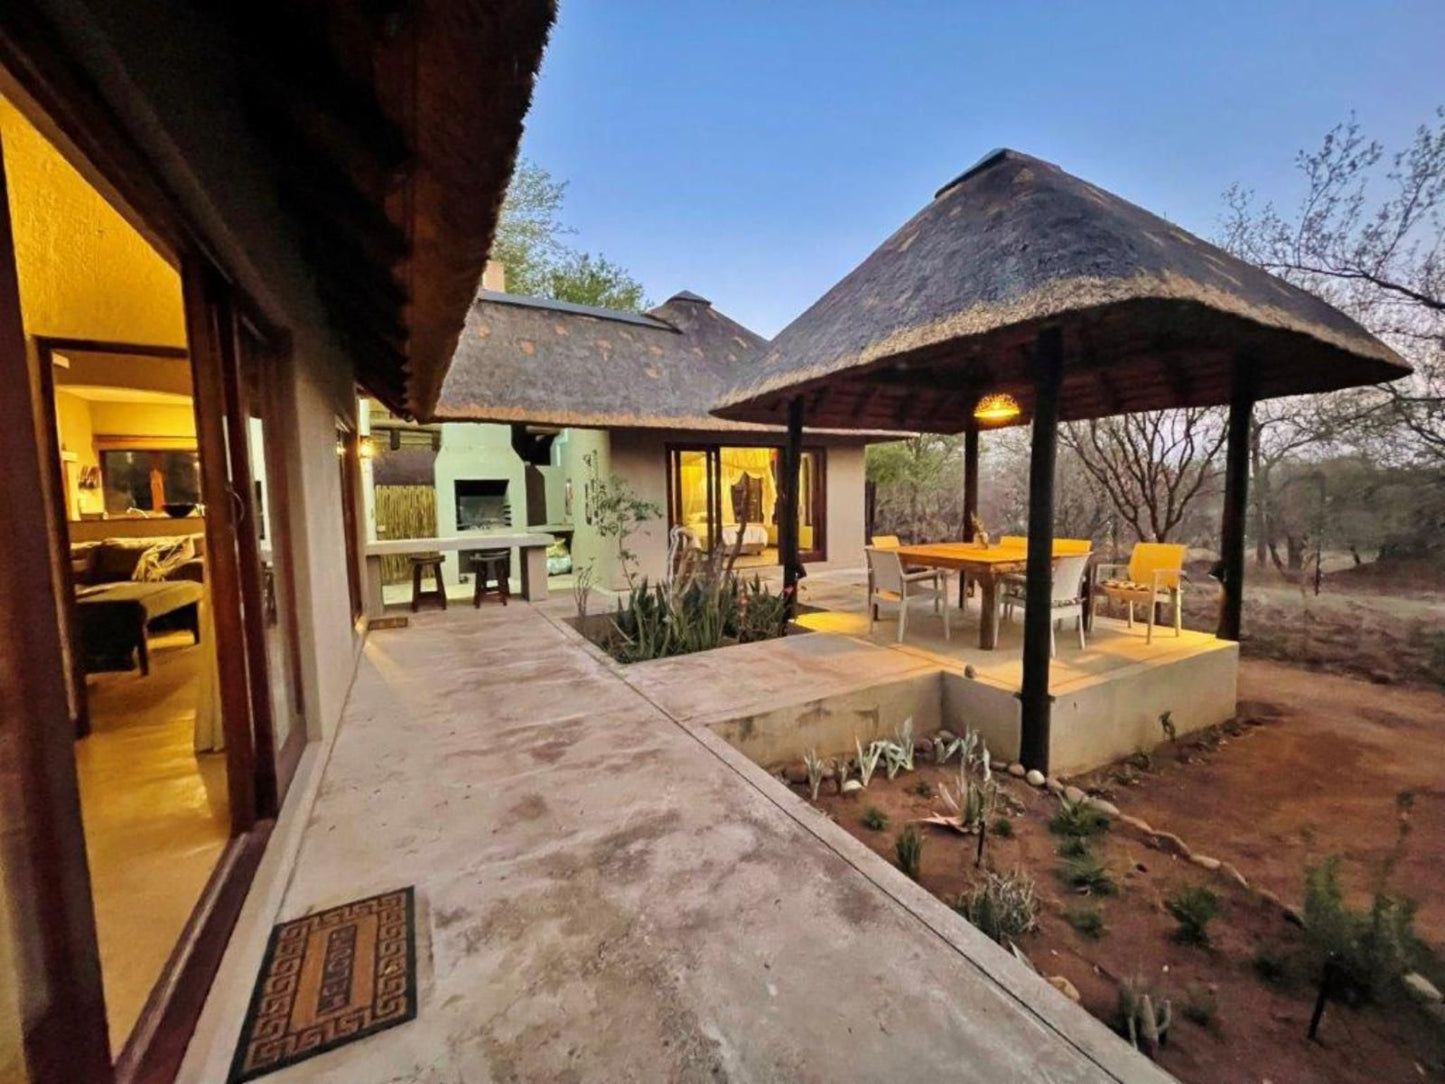 11 Raptors Lodge Hoedspruit Limpopo Province South Africa House, Building, Architecture